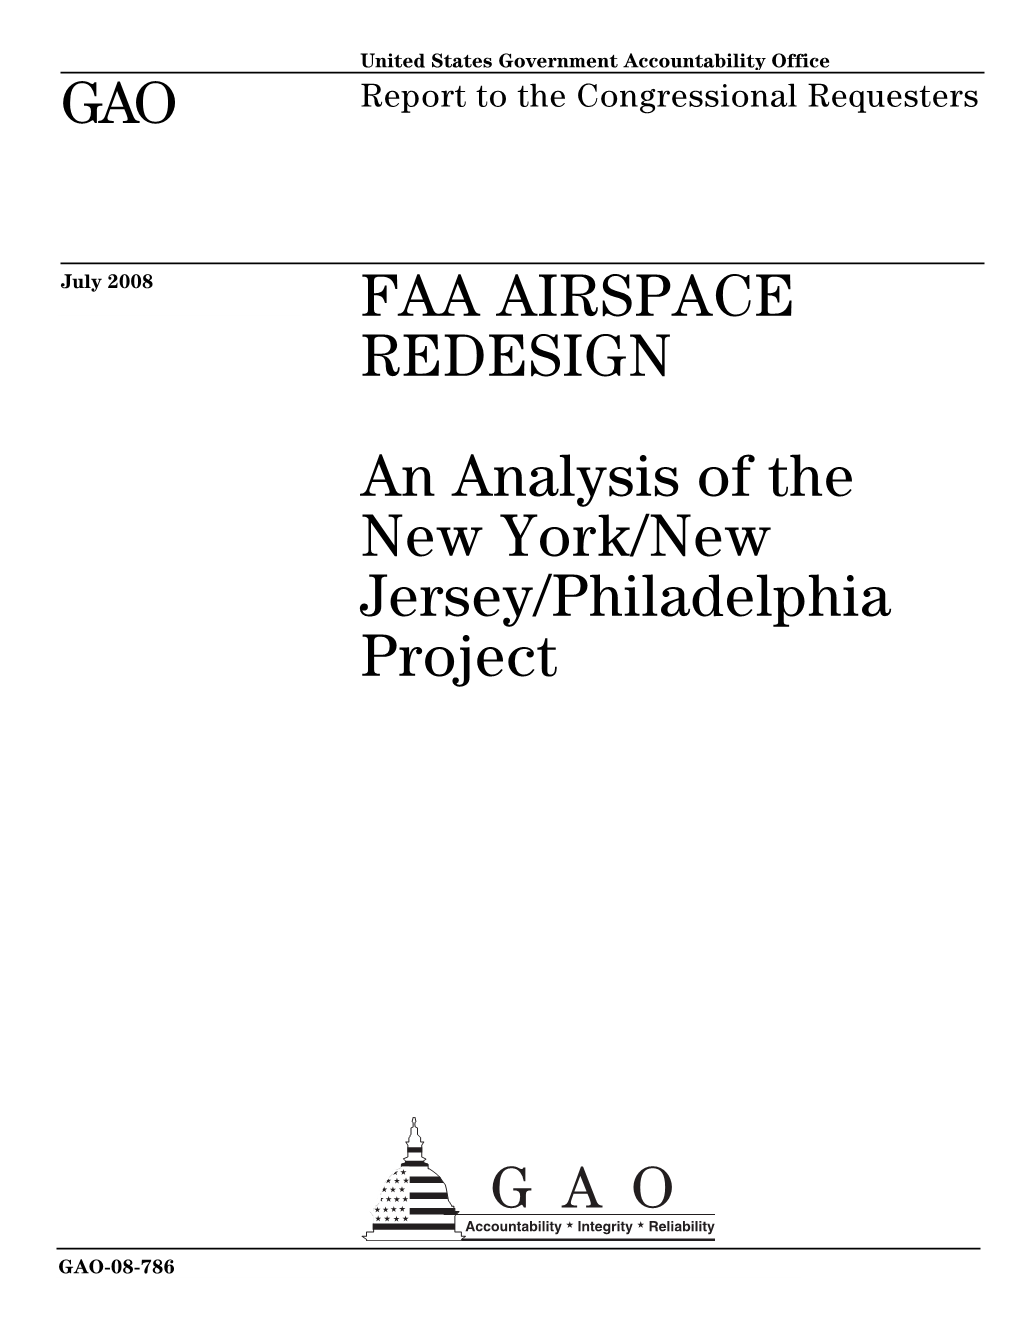 GAO-08-786 FAA Airspace Redesign